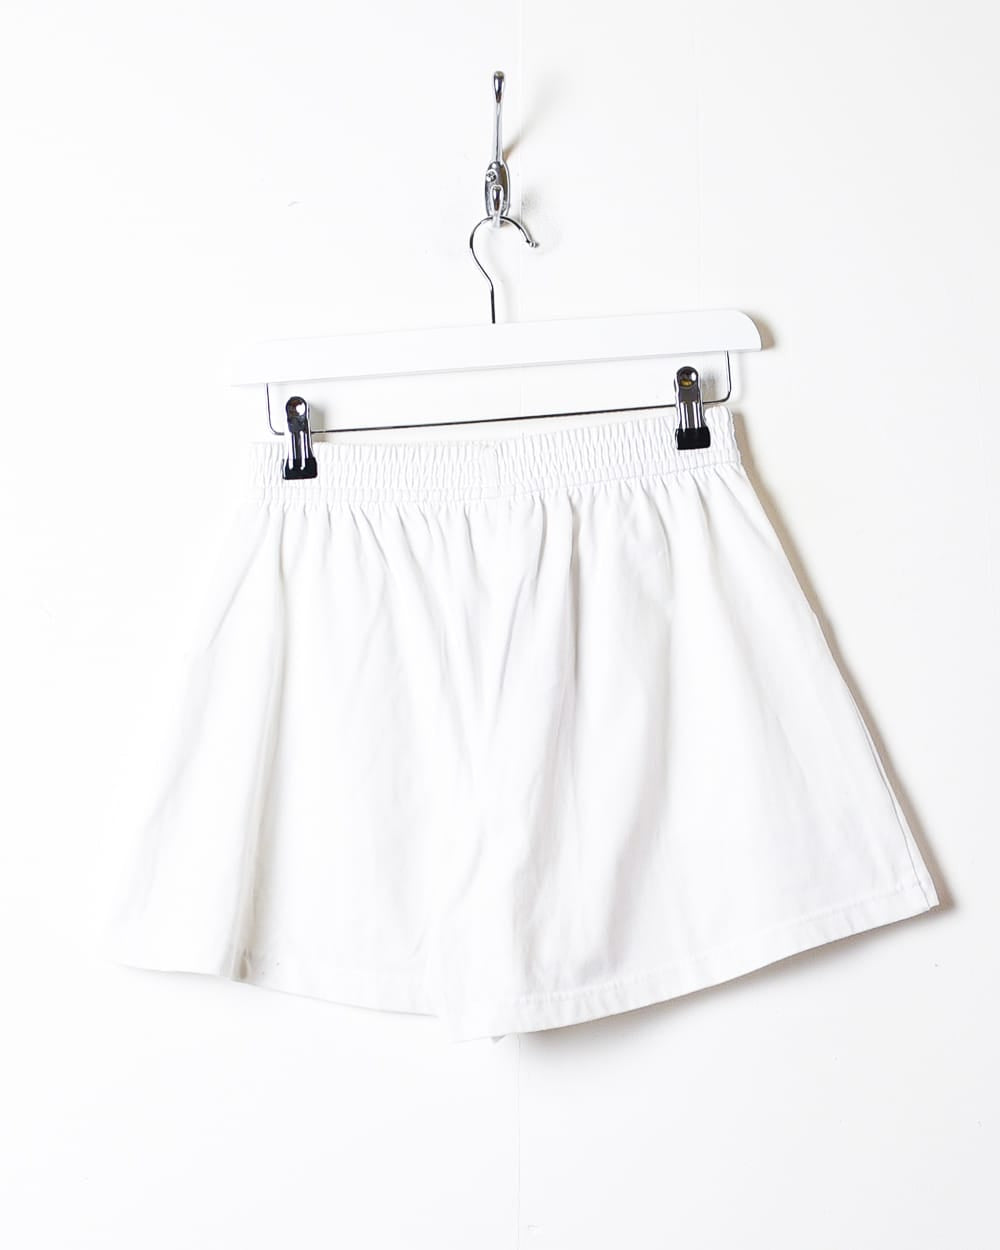 White Lotto Shorts - Medium